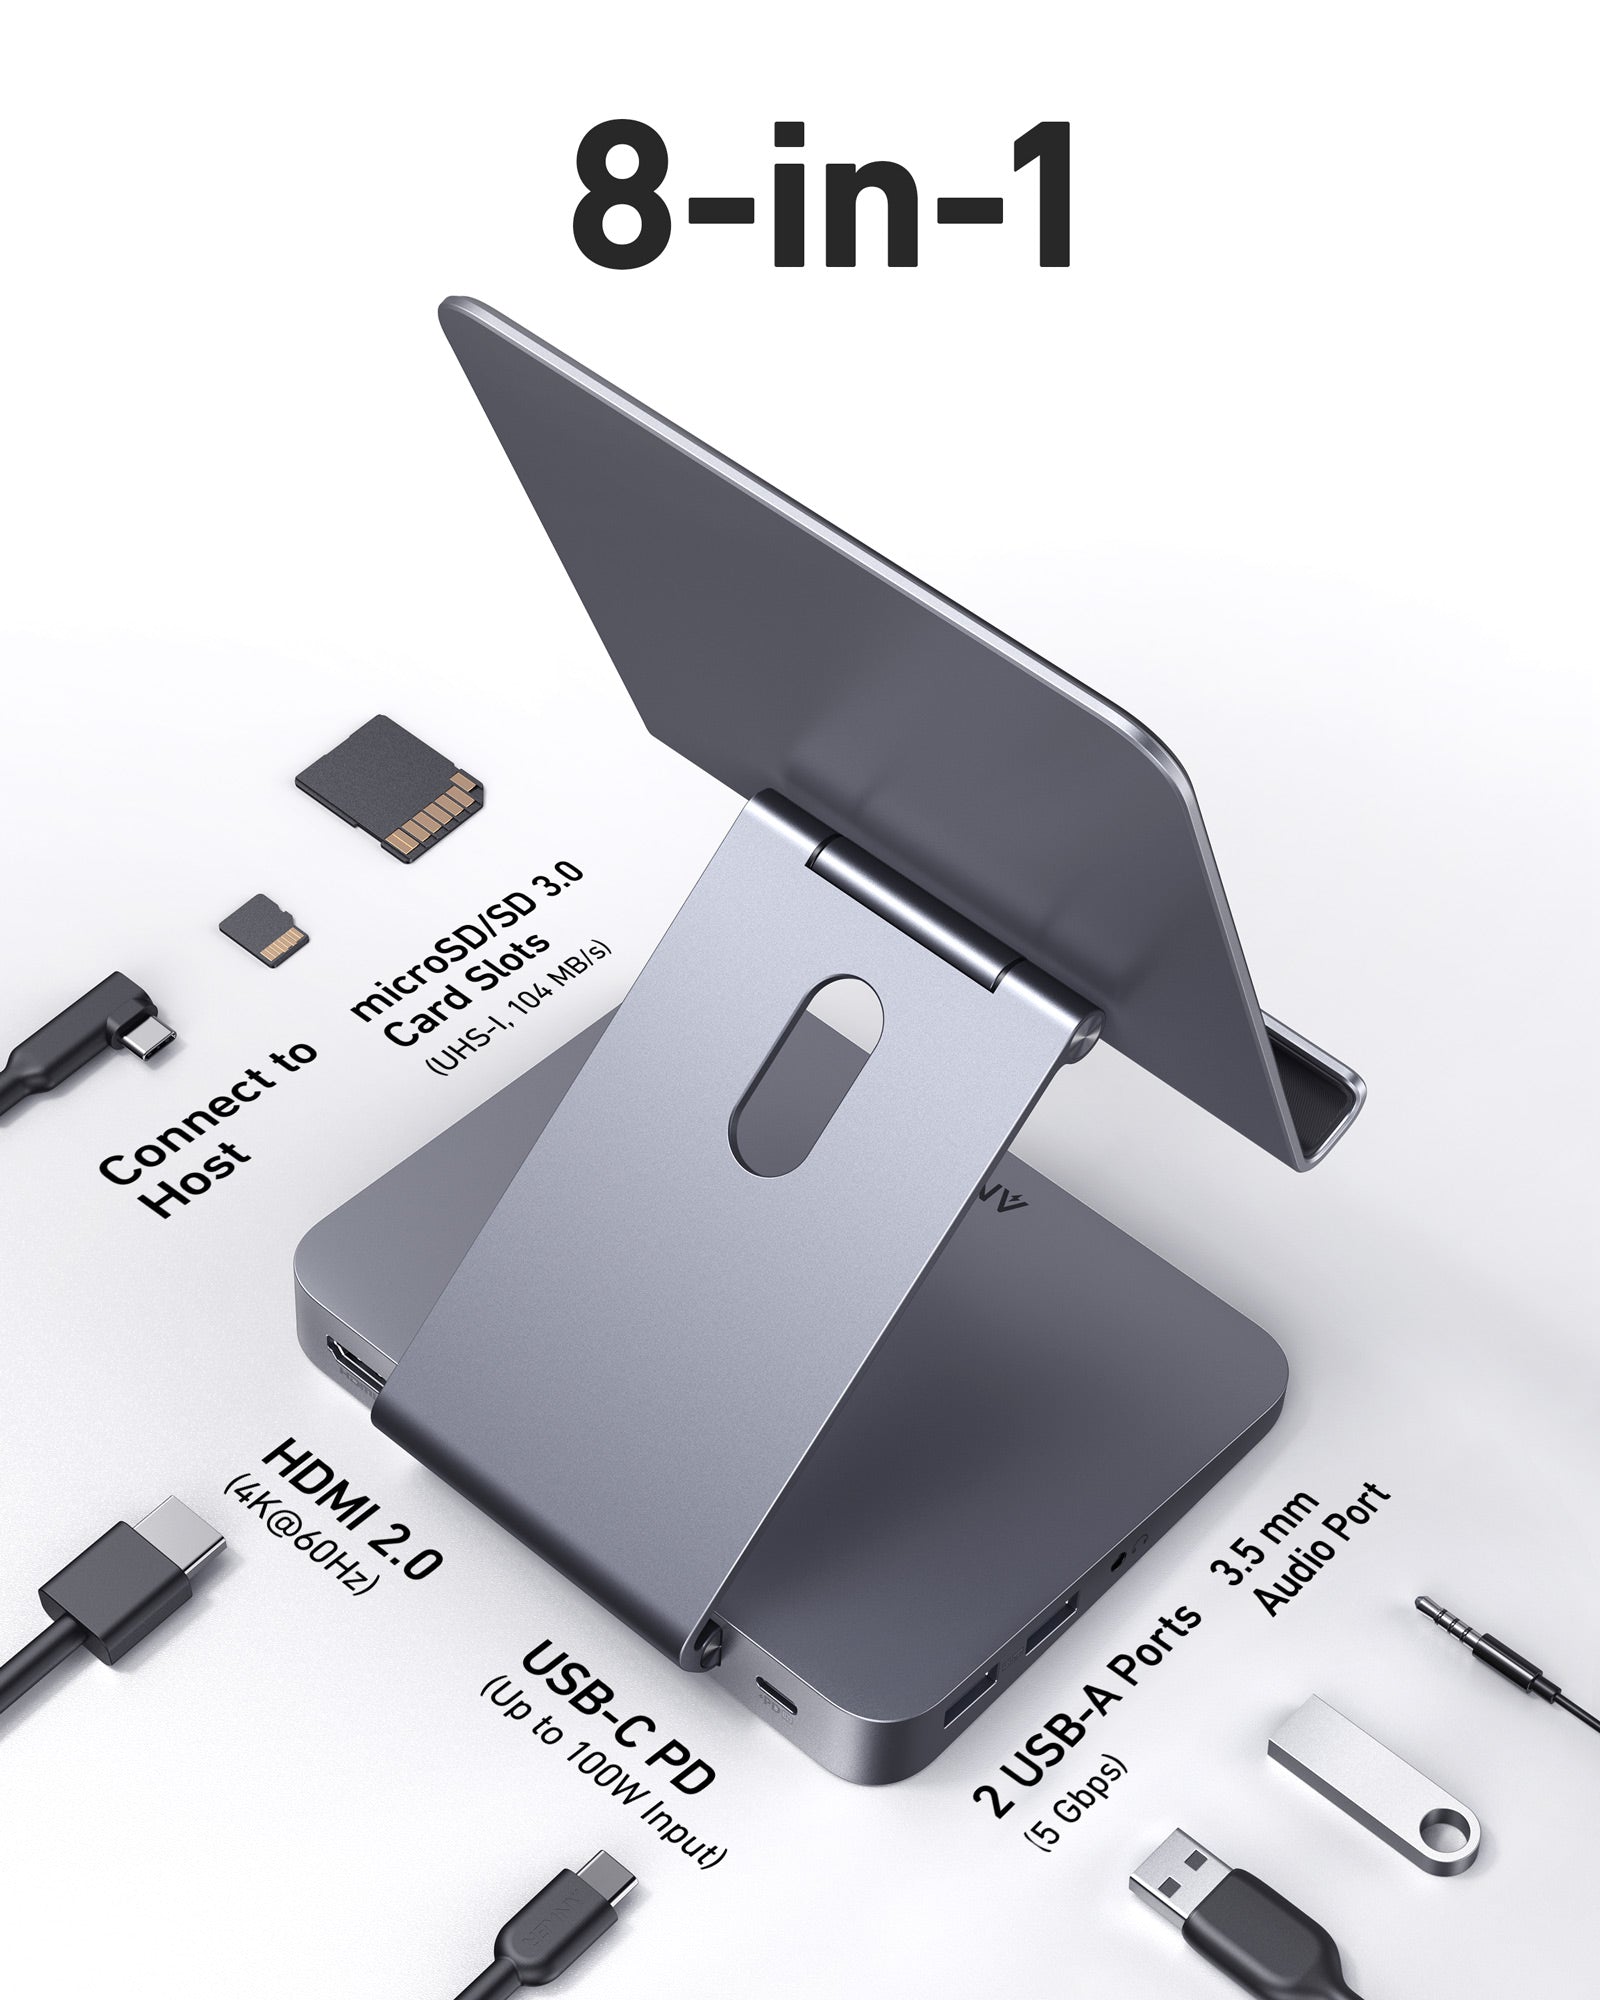 Anker 551 USB-C Hub (8-in-1, Tablet Stand) Anker US